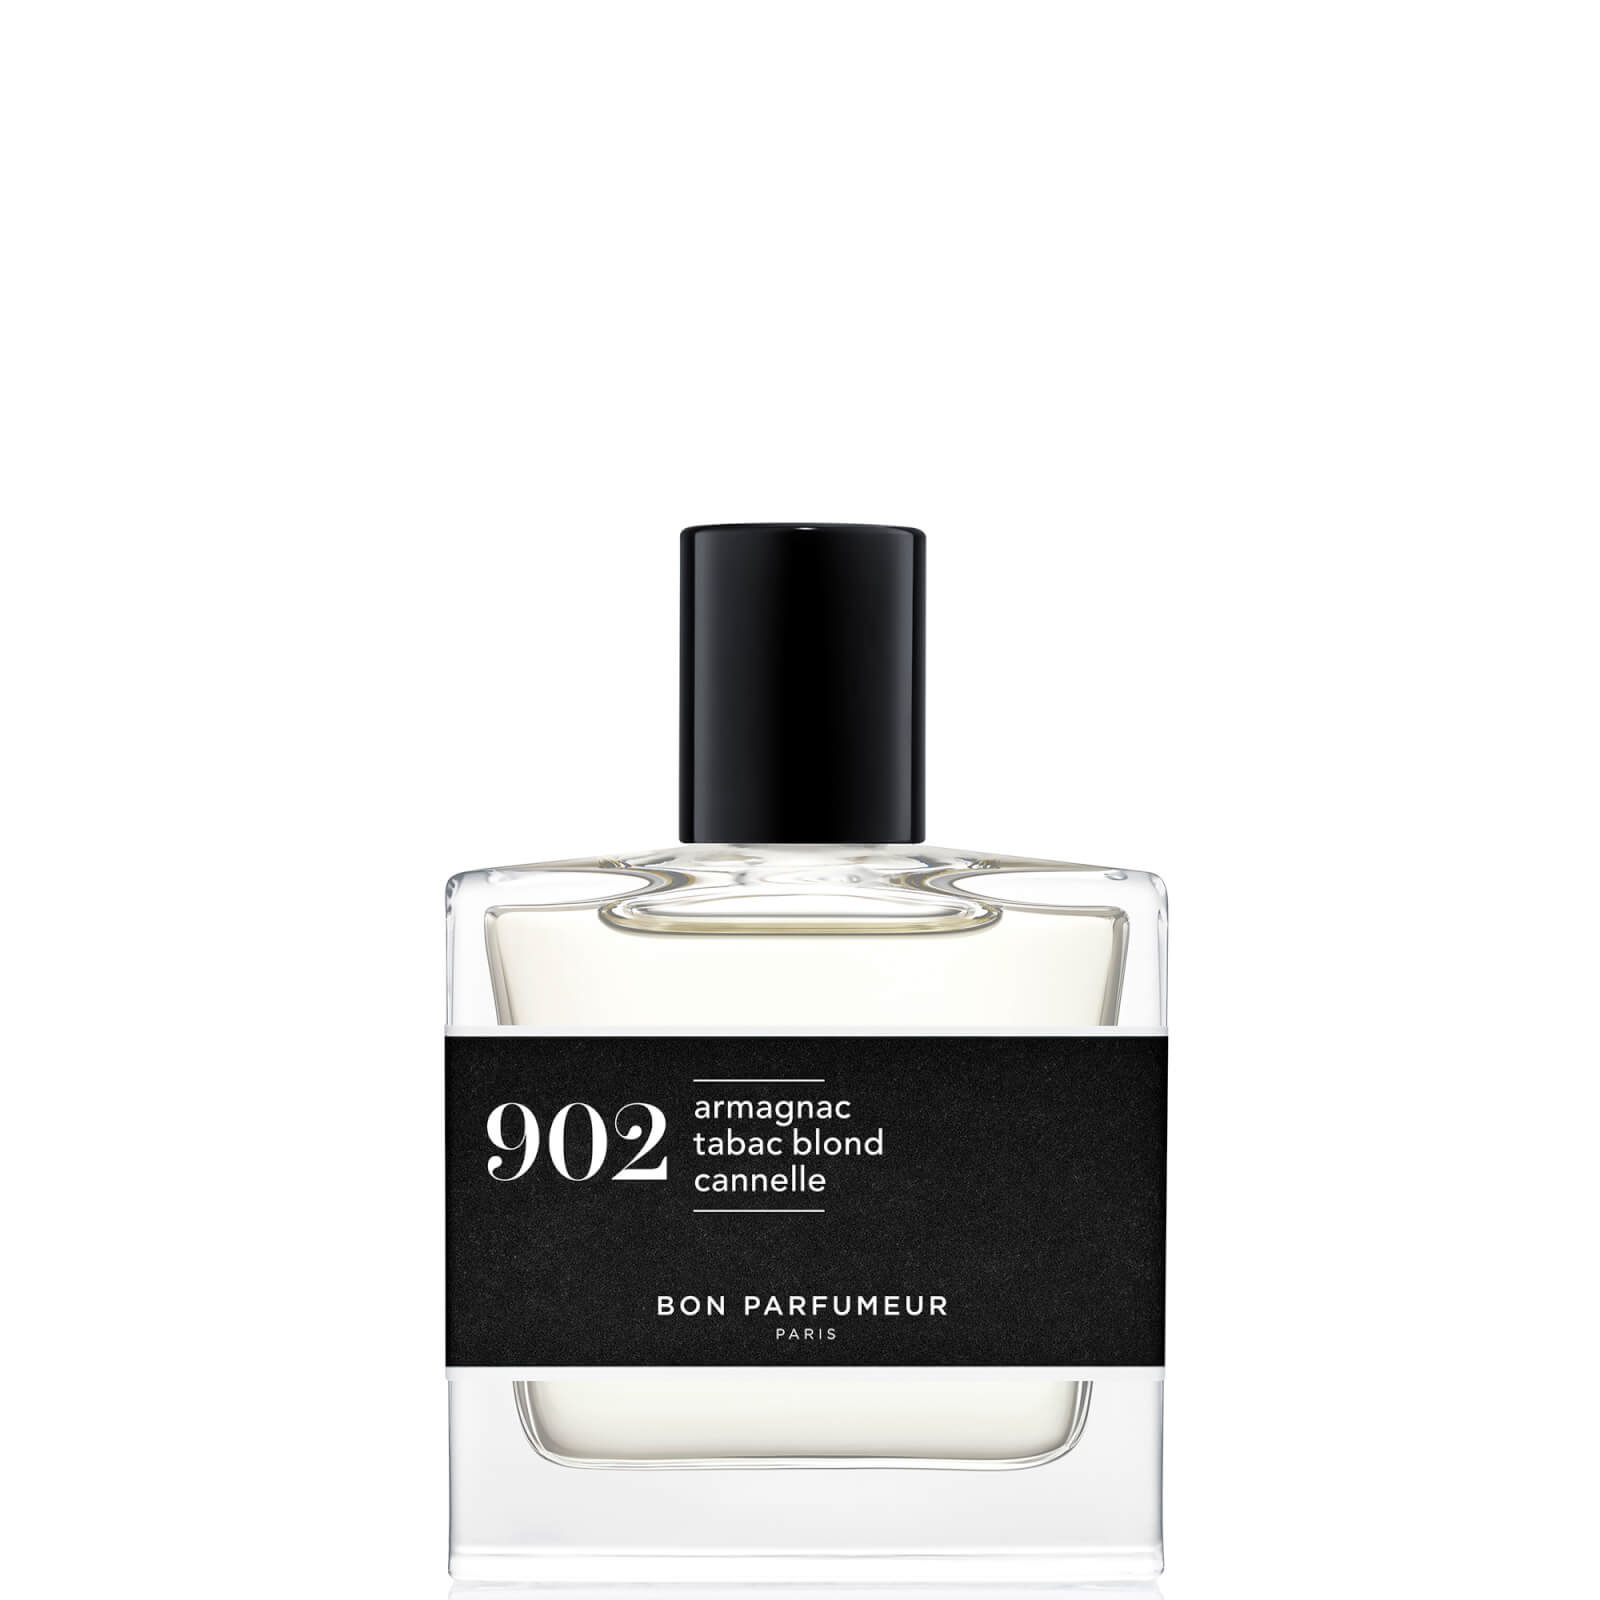 Image of Bon Parfumeur 902 Armagnac Biondo Tabacco Cannella Eau de Parfum - 30ml